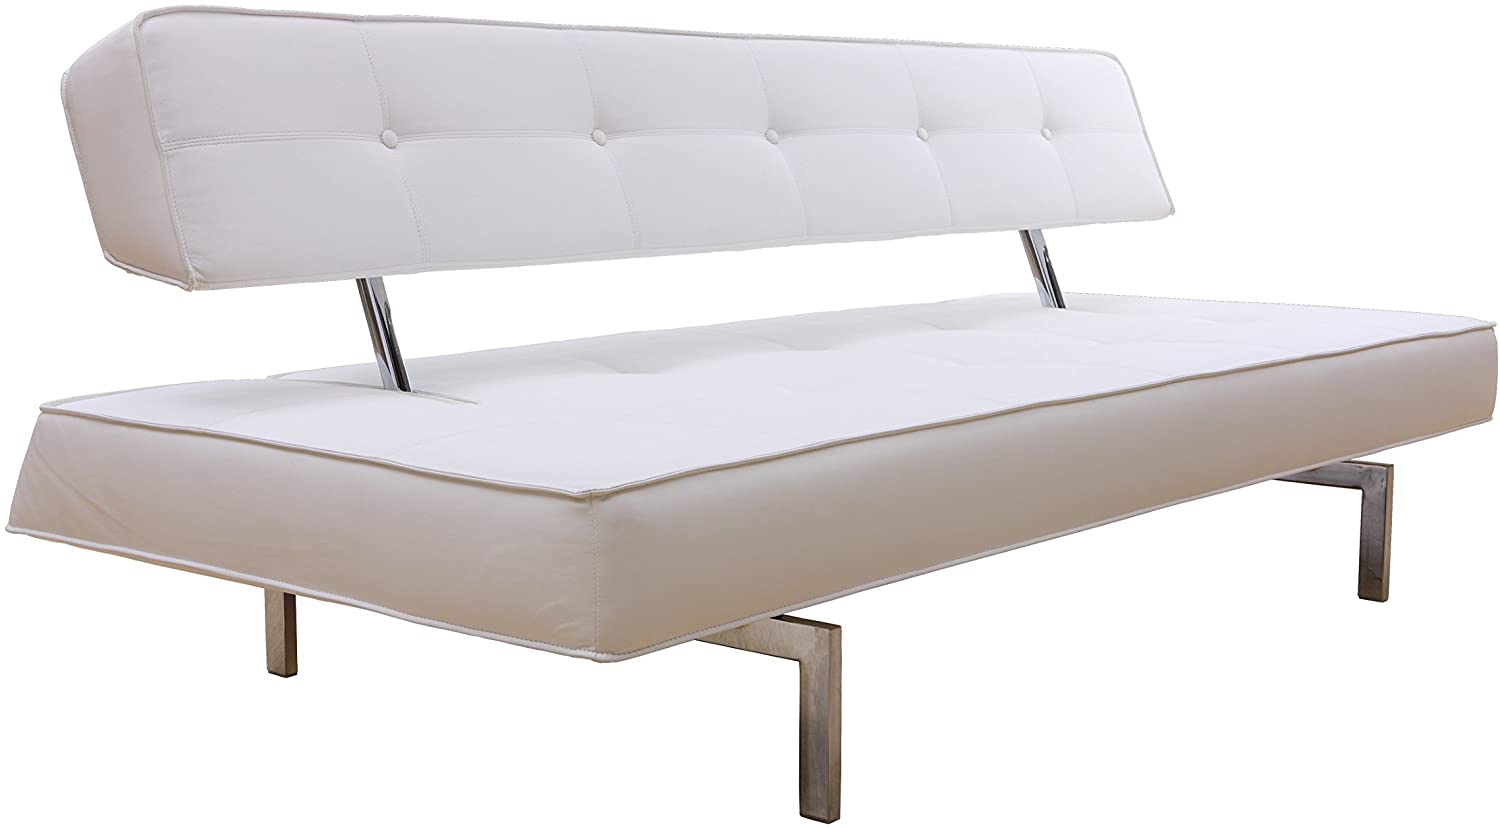 J and M Premium White Leatherette Sofa Bed